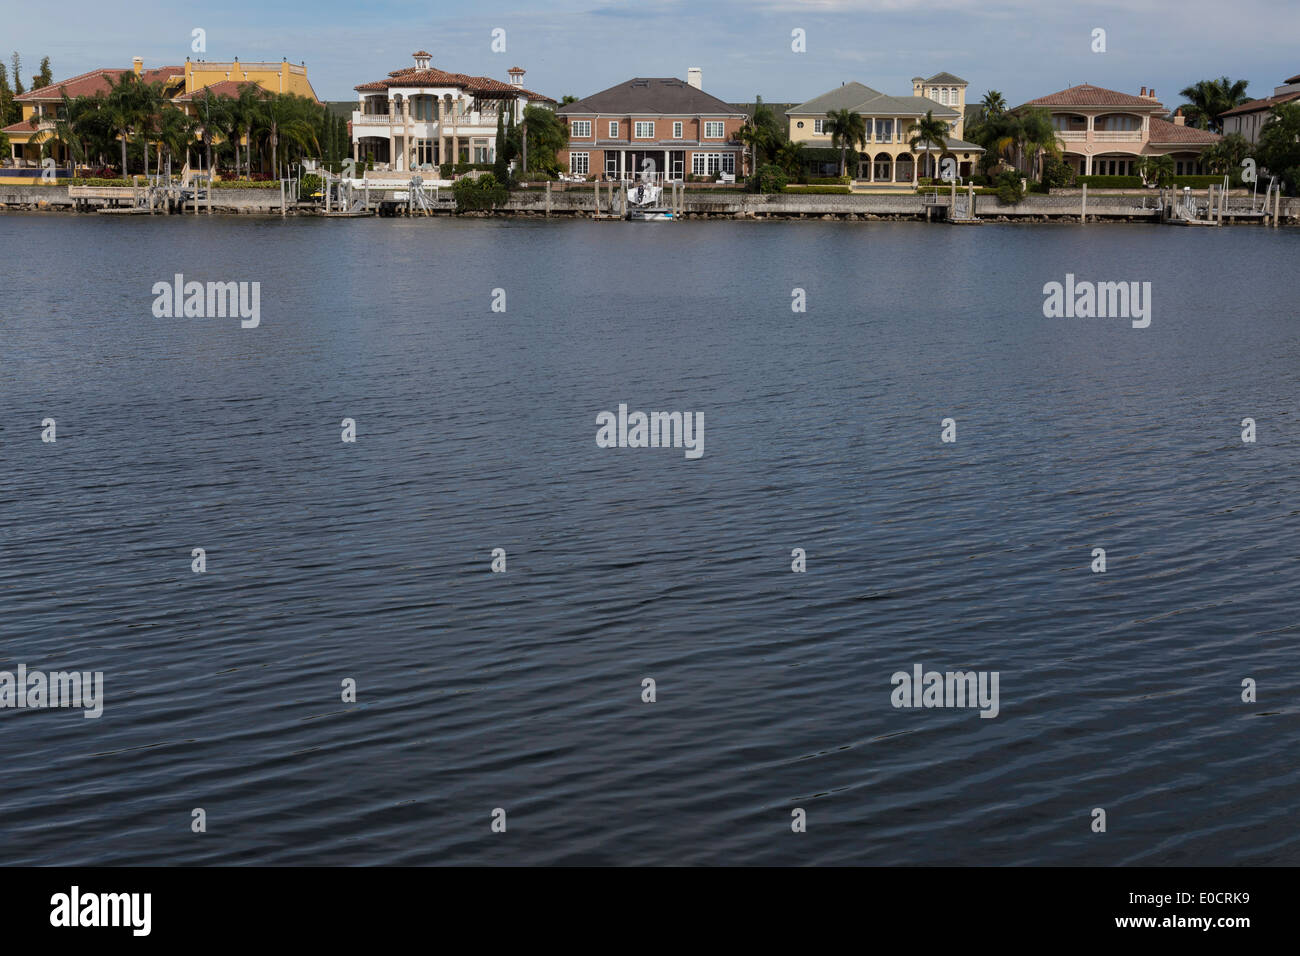 Harbour Island from Davis Islands Across the Seddon Channel, Tampa, FL, USA Stock Photo